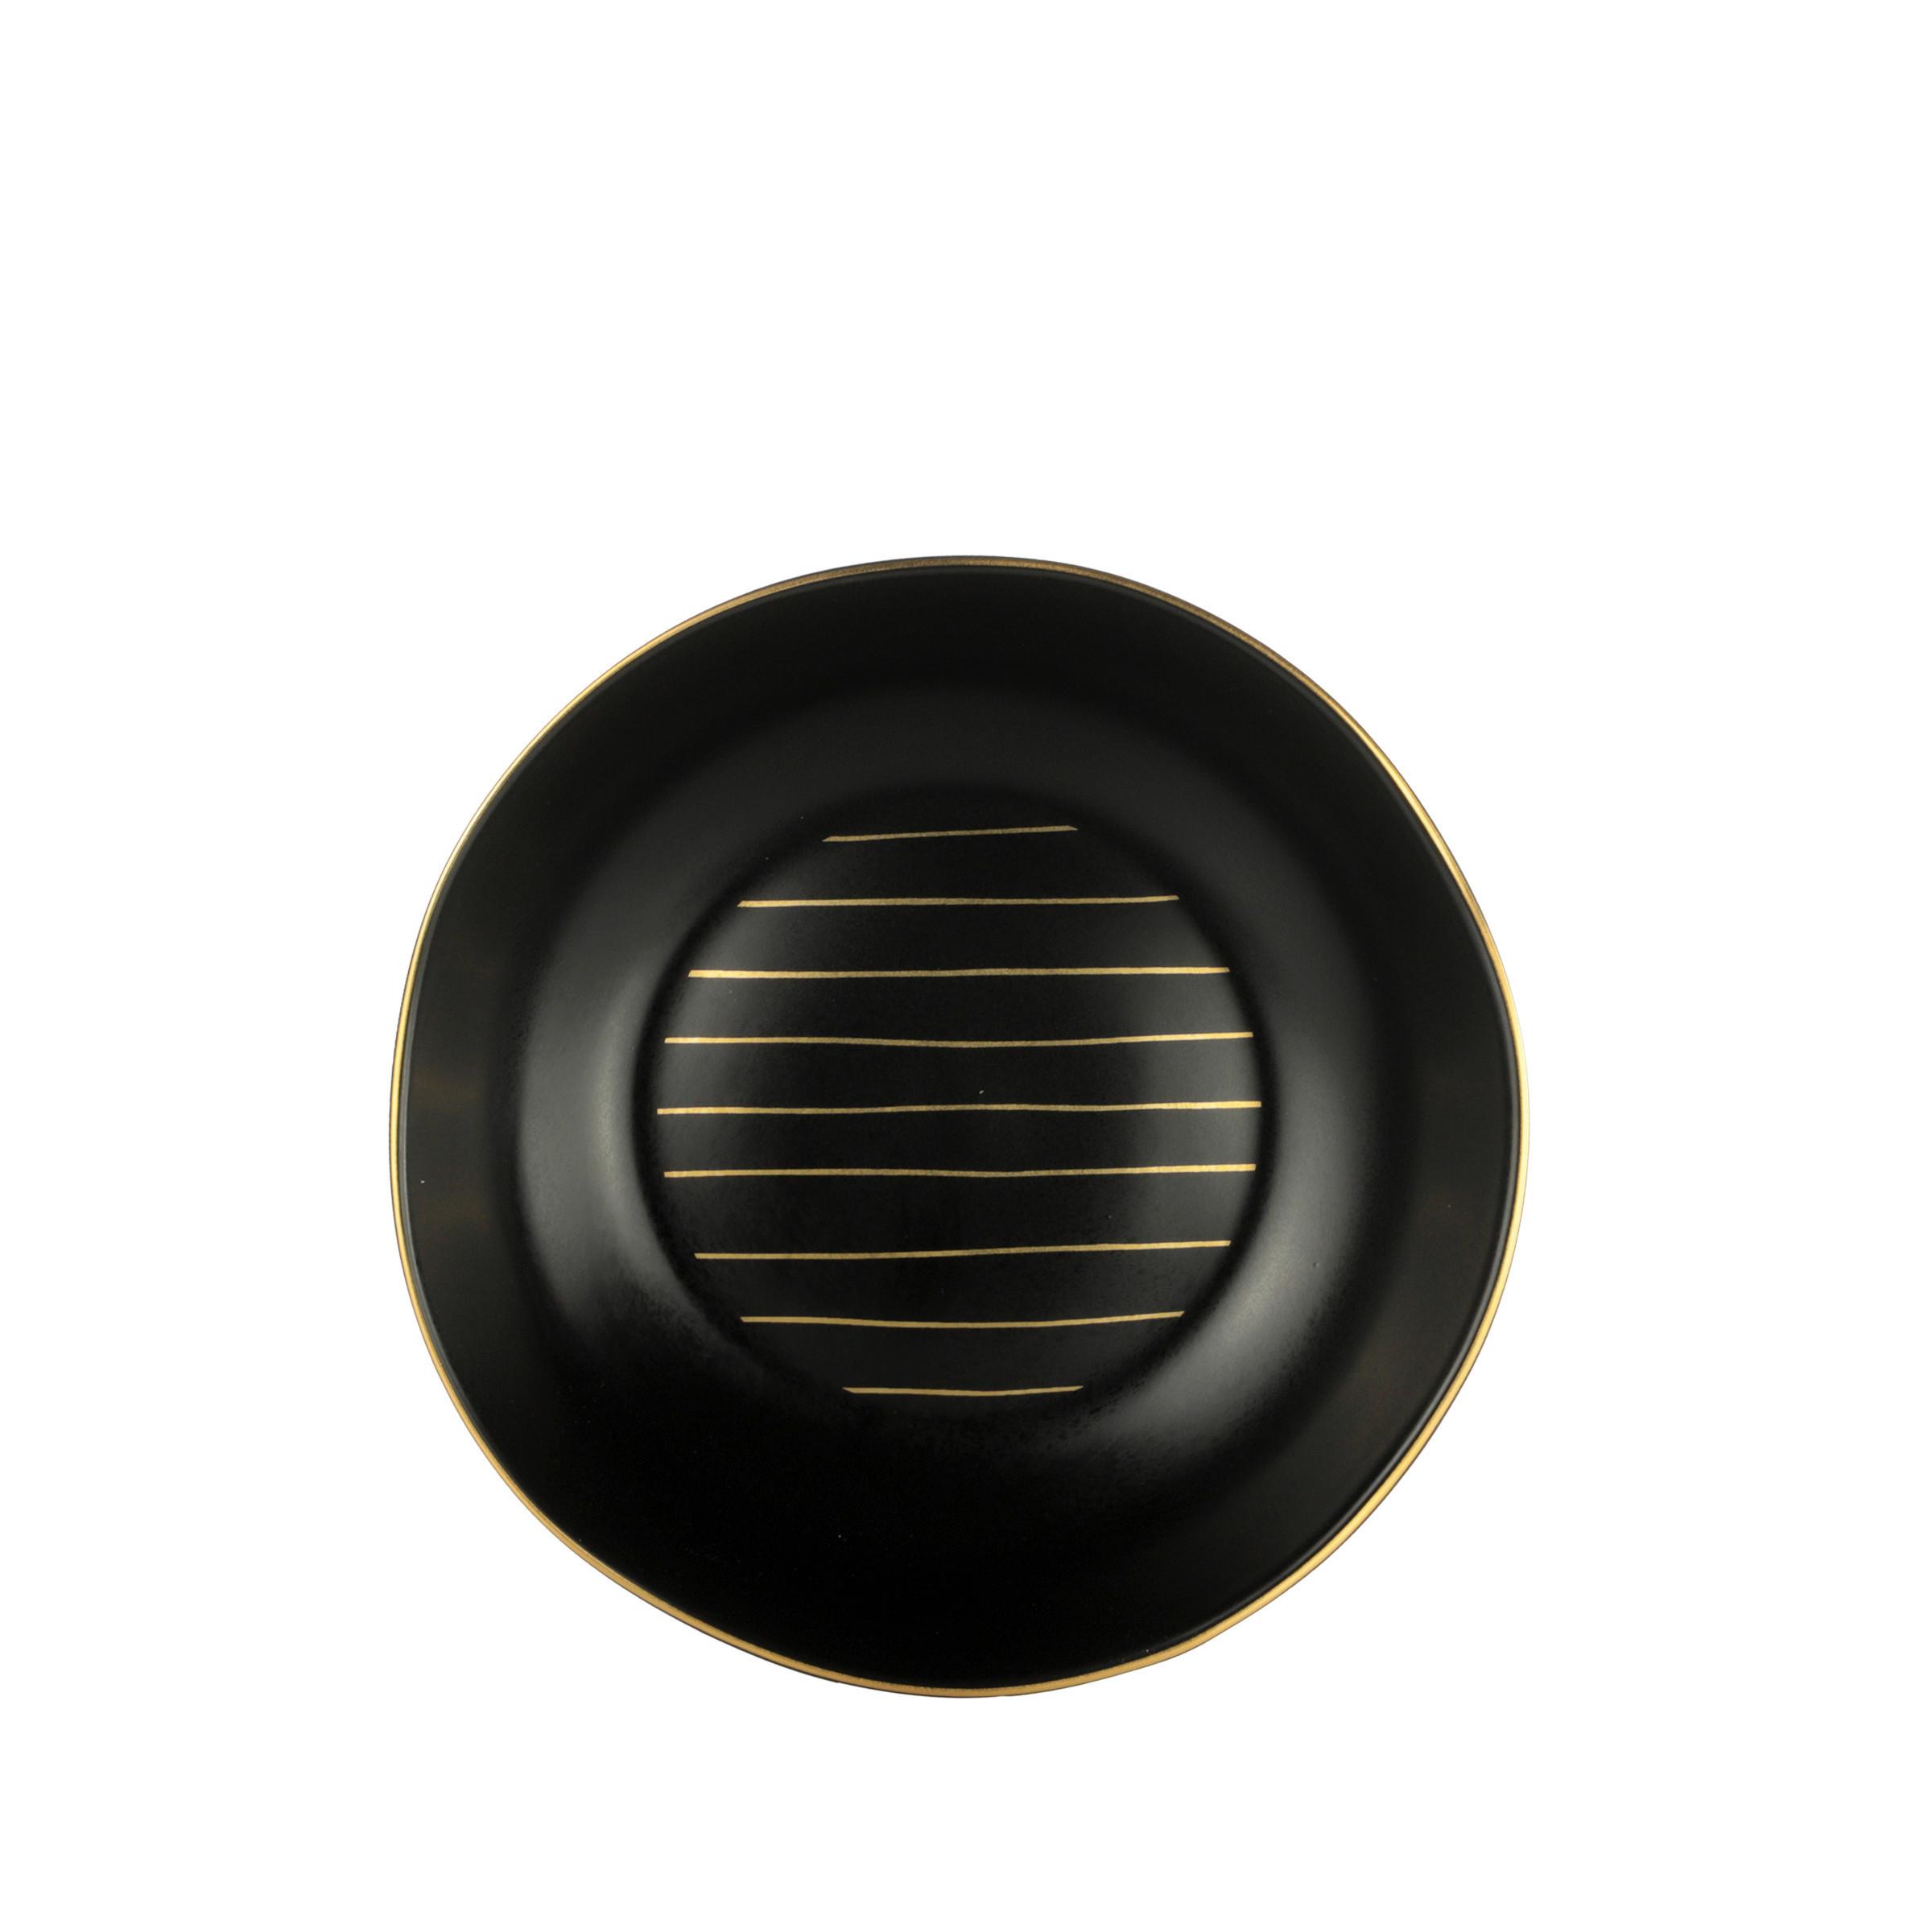 Hluboký Talíř Onix - černá/barvy zlata, Moderní, keramika (20,5cm) - Premium Living